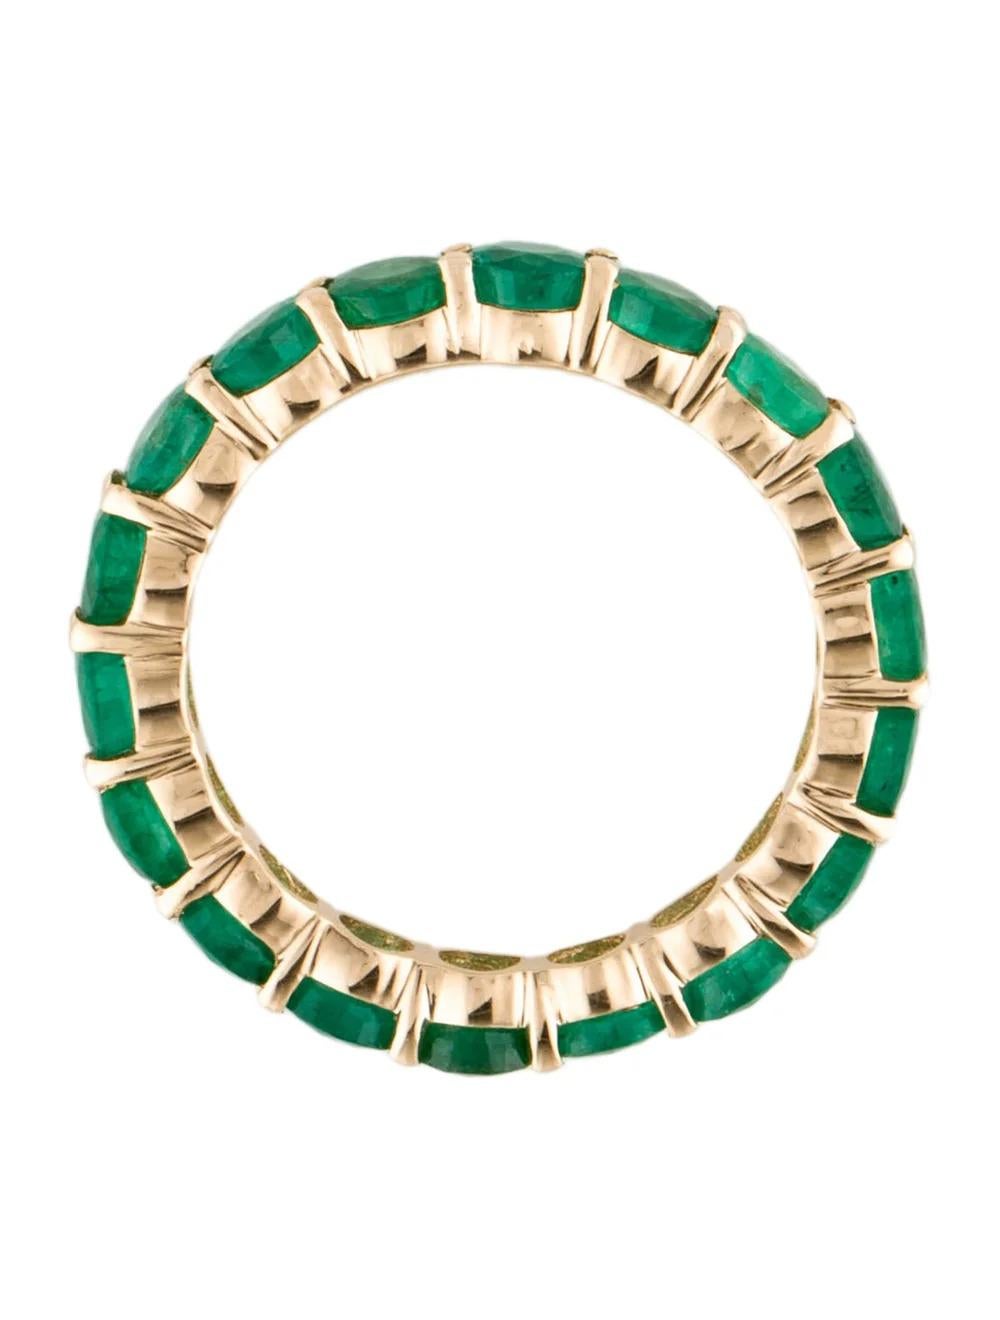 Women's 14K Emerald Eternity Band Ring 2.88ctw Green Gemstone - Size 7.75 - Fine Jewelry For Sale